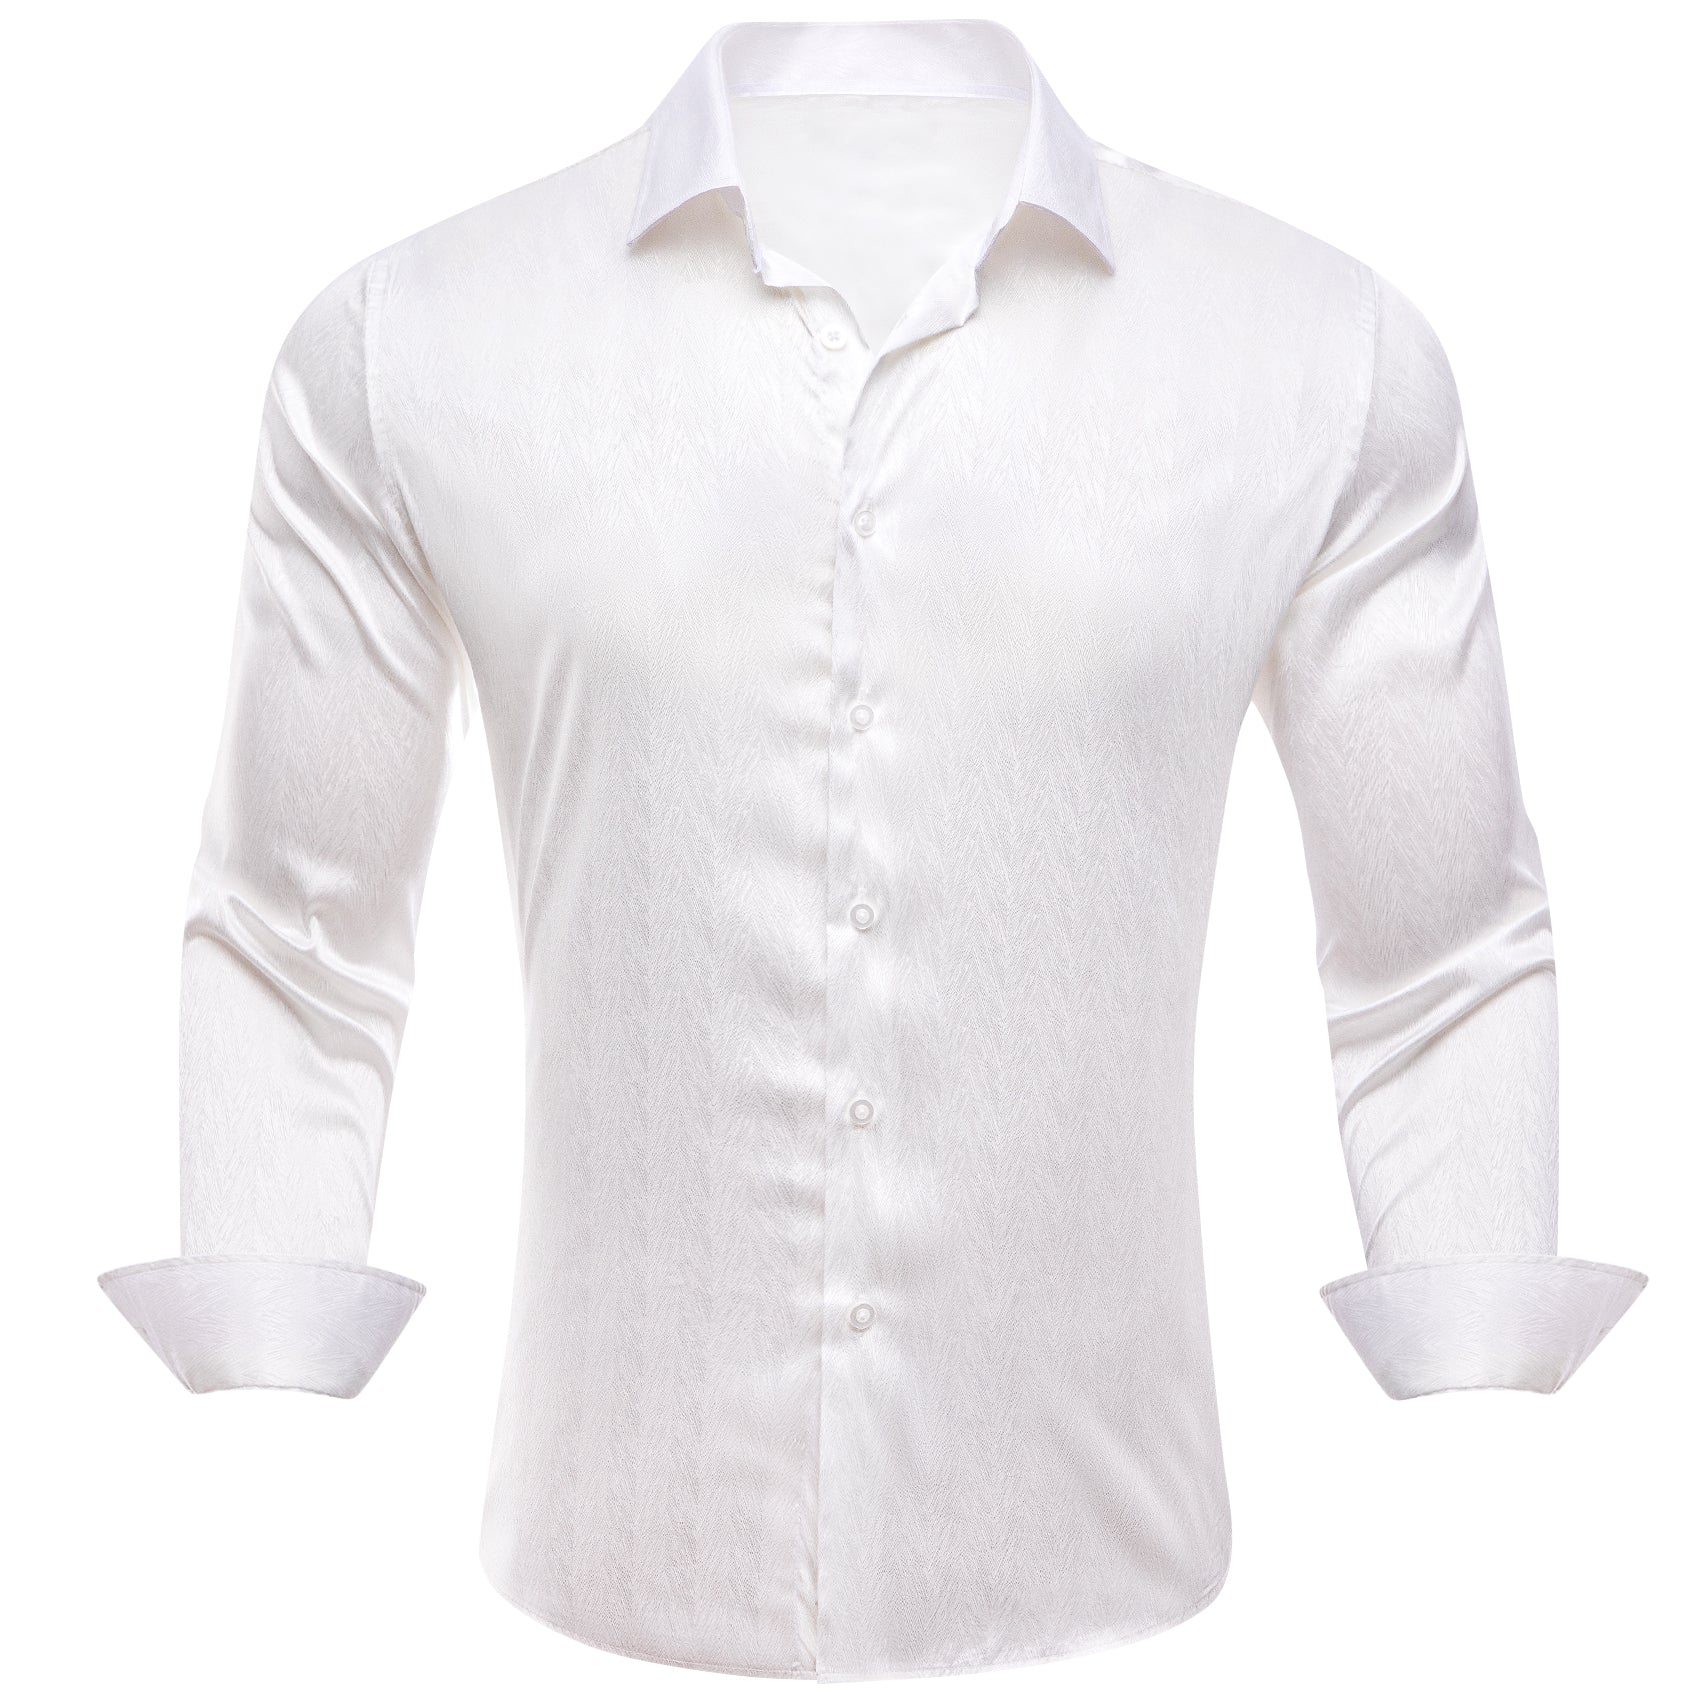 Barry.wang New White Solid Silk Men's Shirt